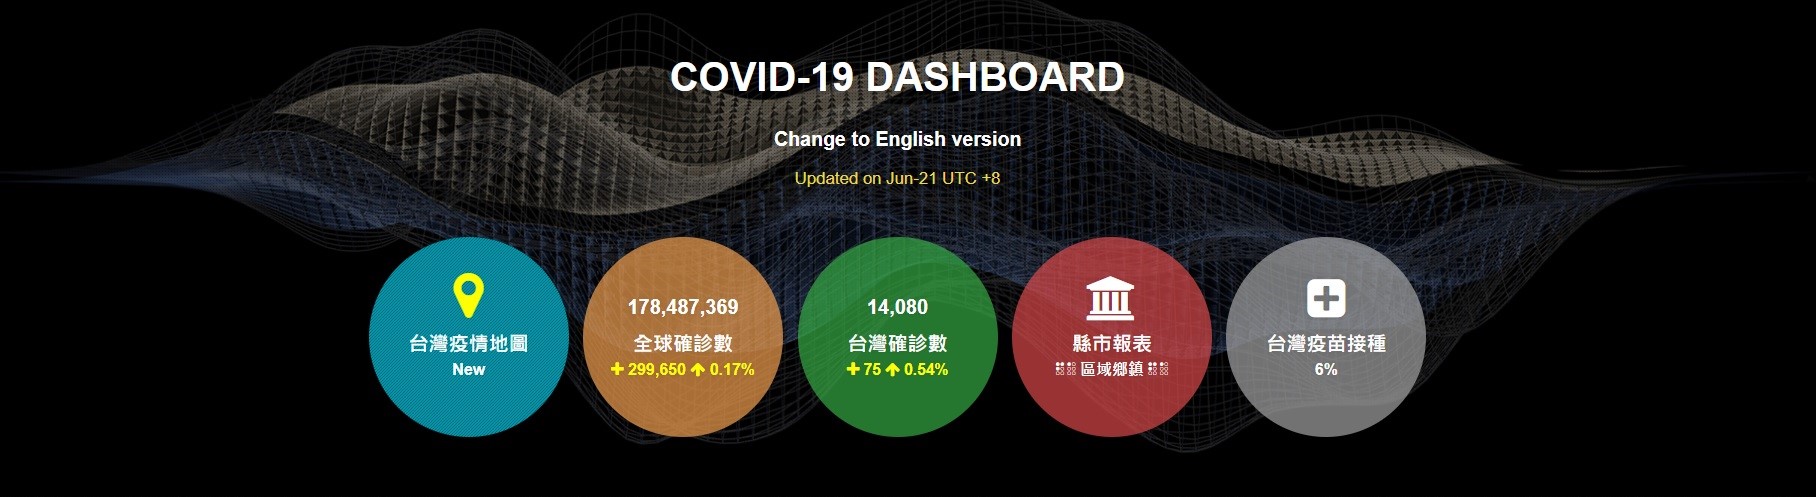 The homepage of COVID-19 dashboard